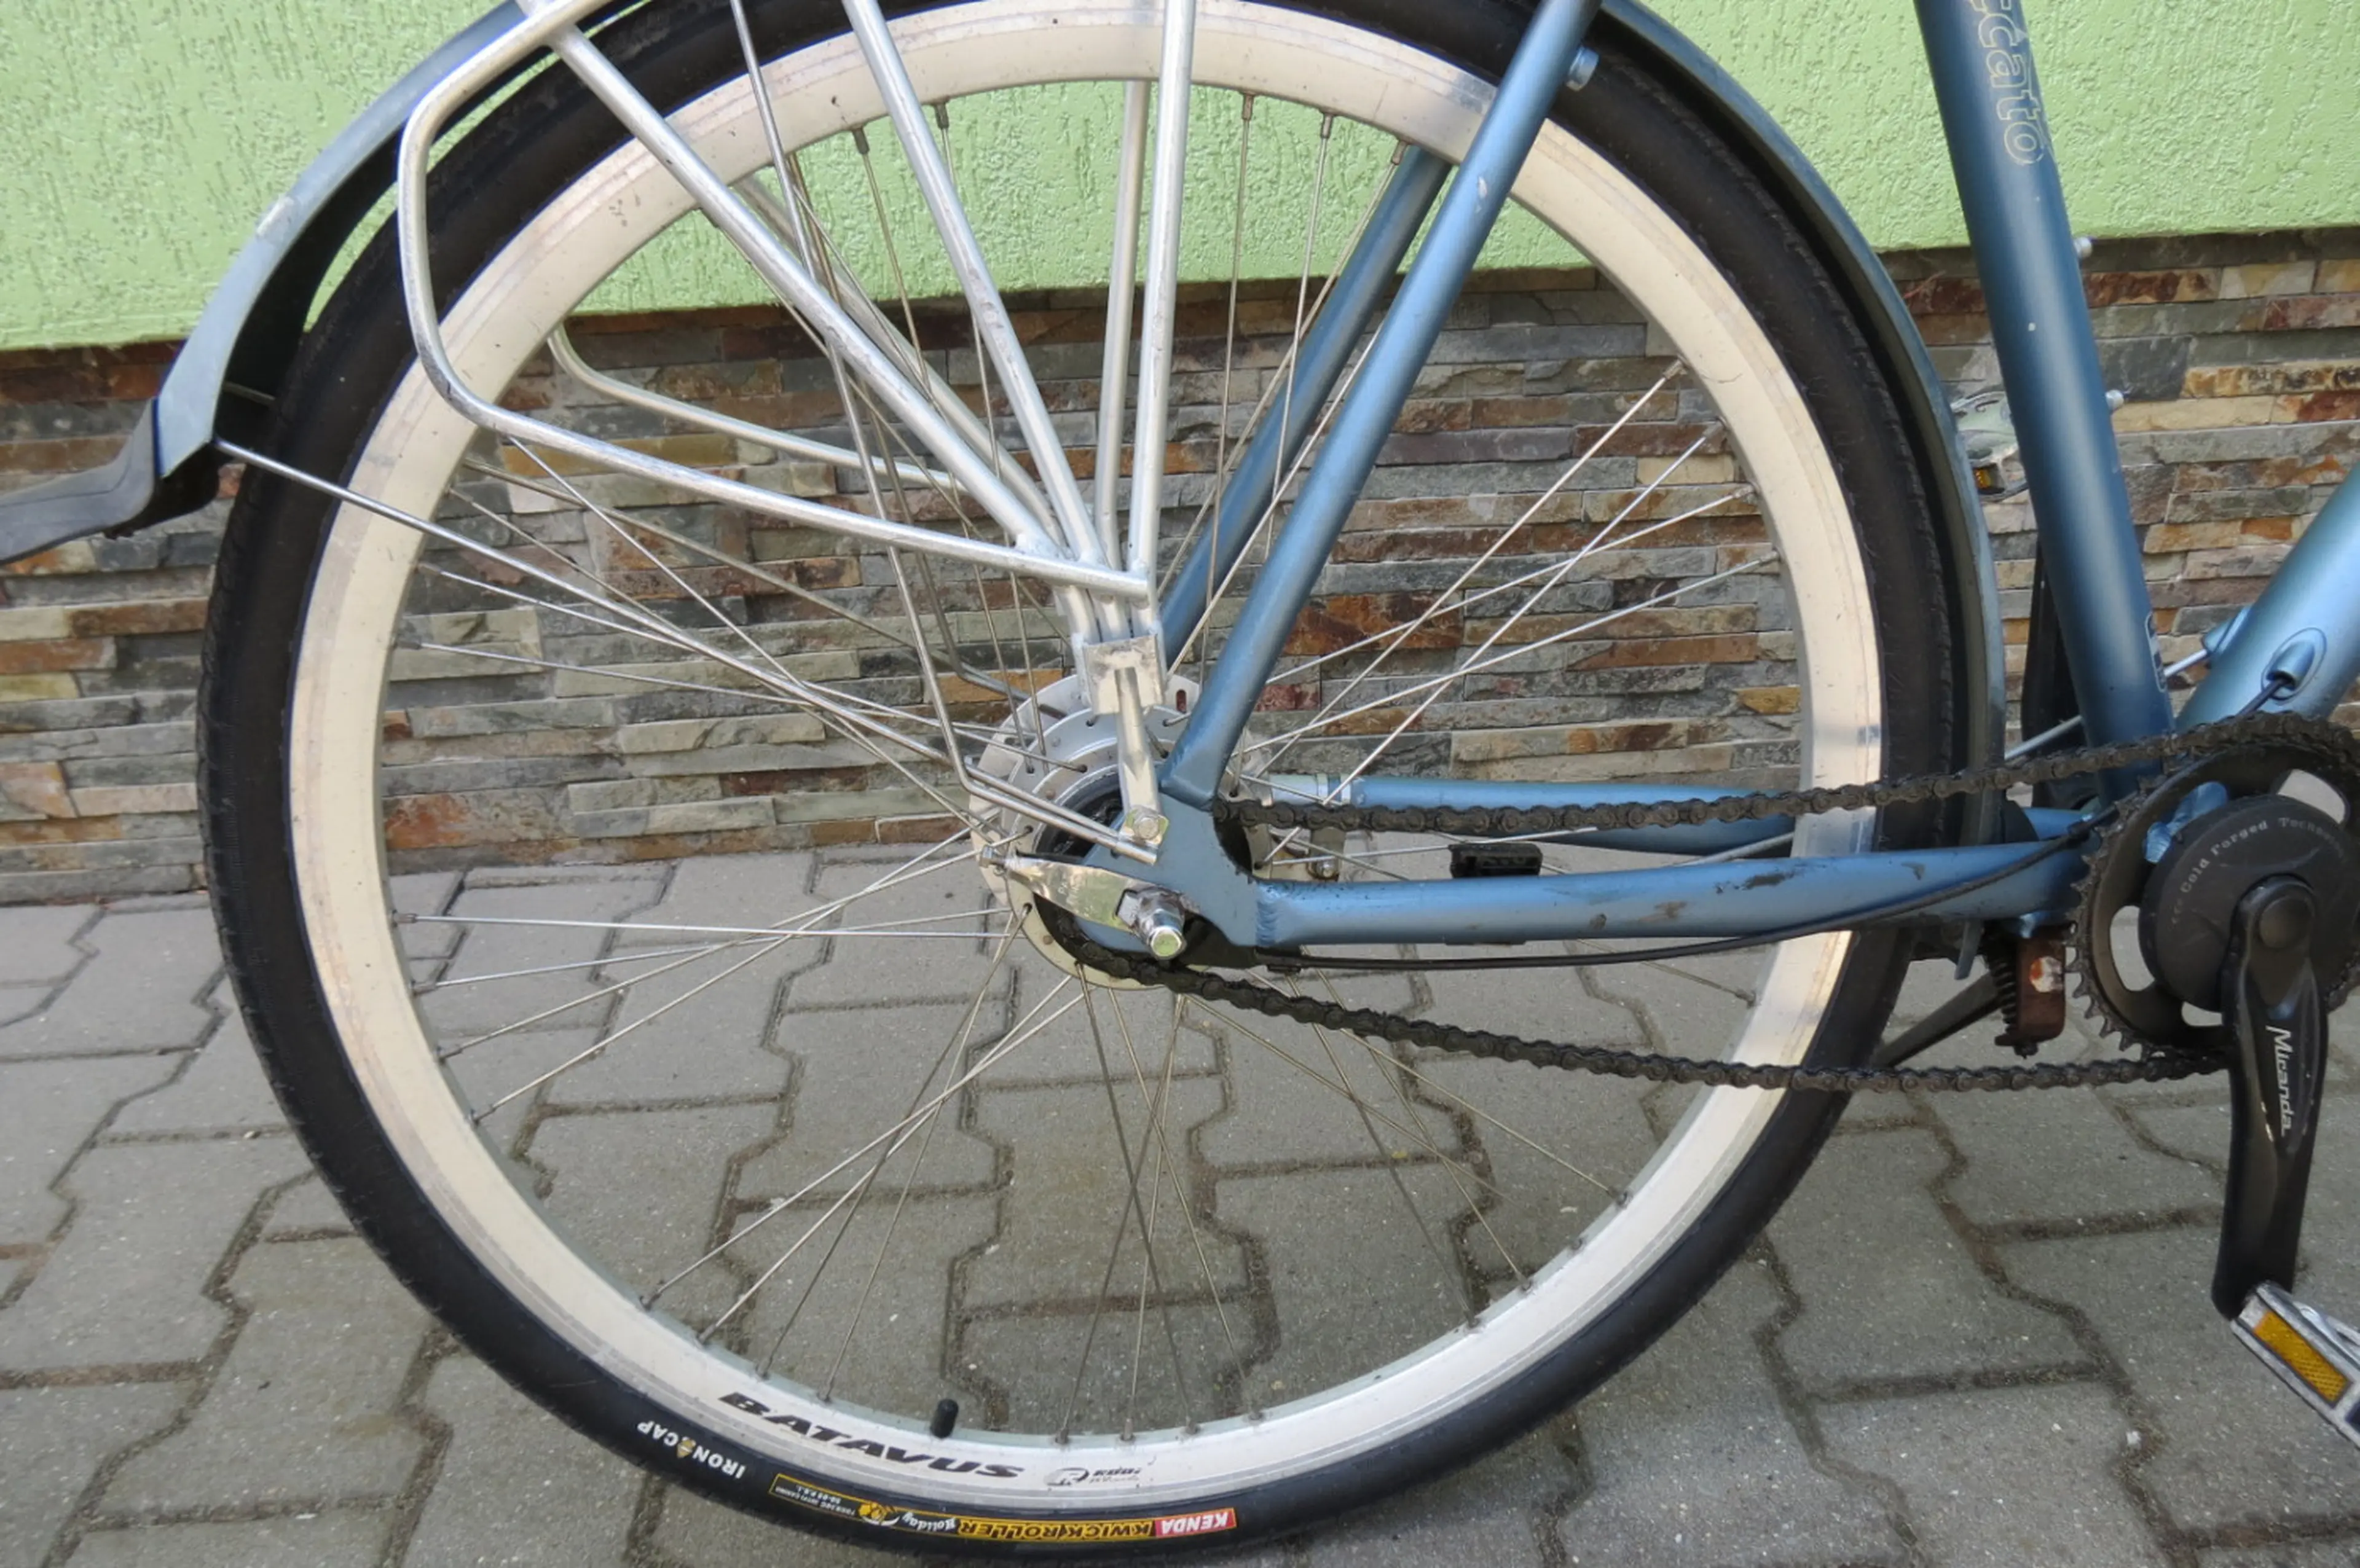 2. Bicicleta Batavus Staccato